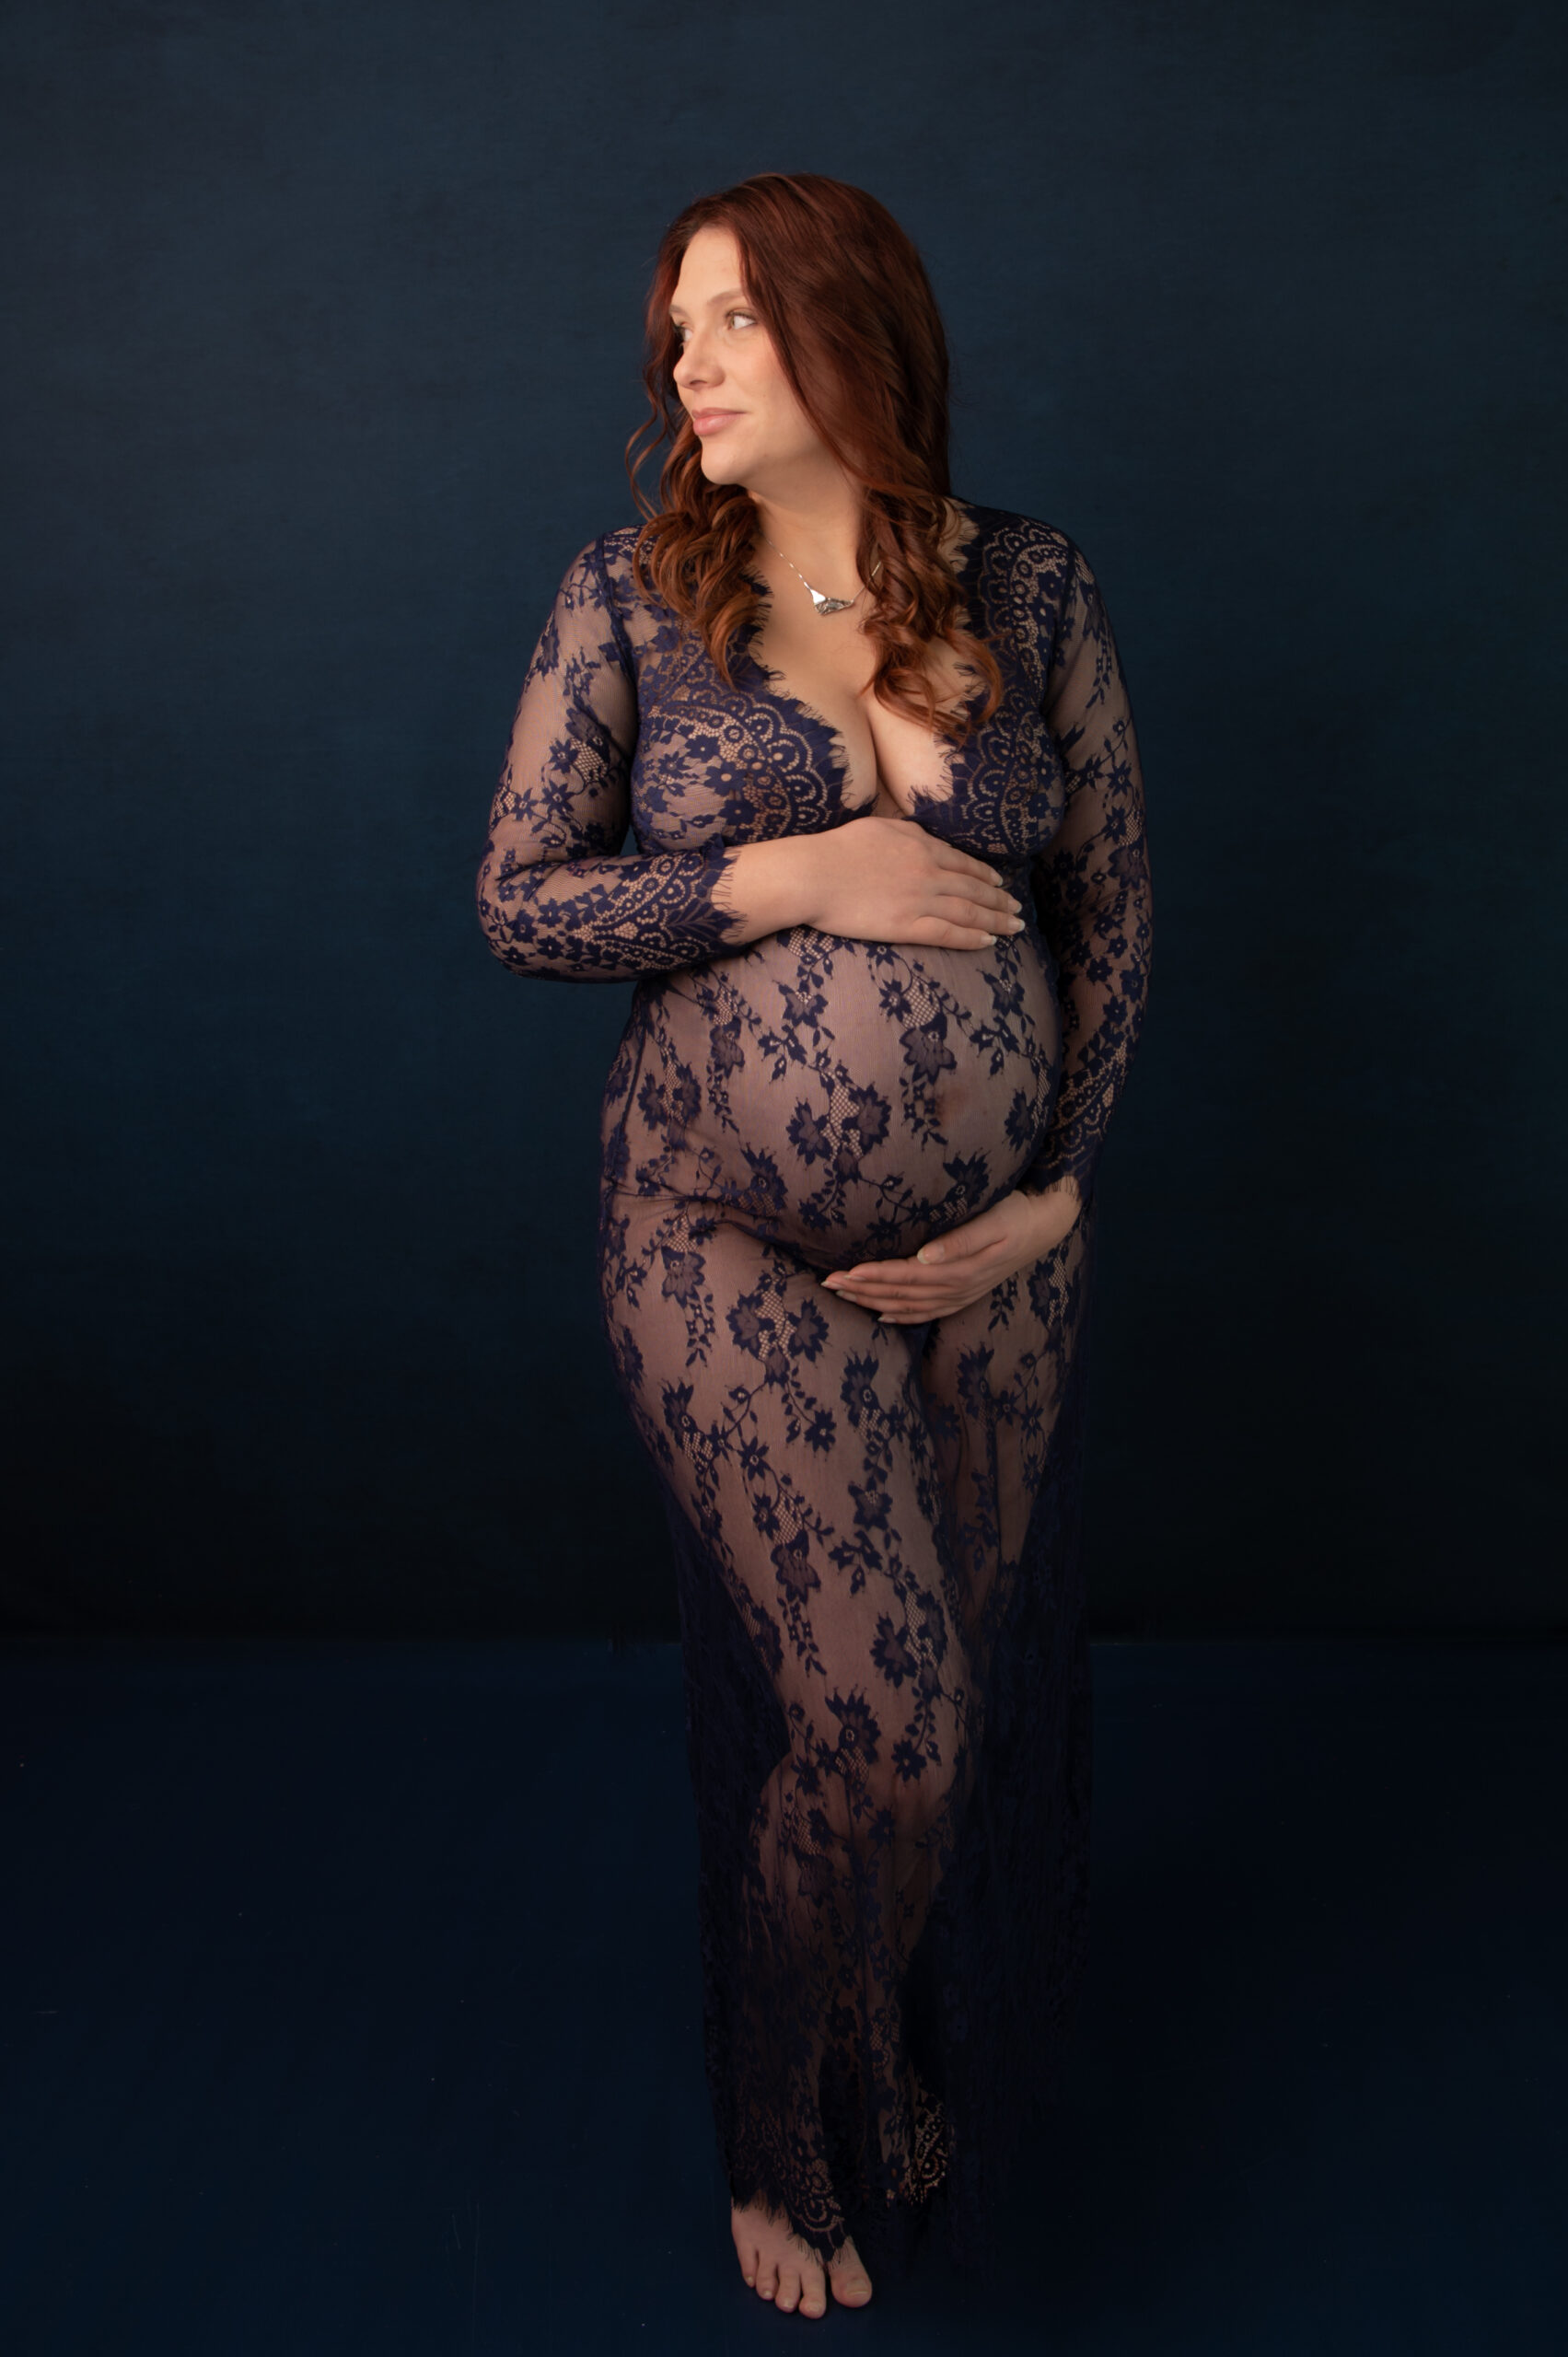 jurken voor zwangerschapsshoot